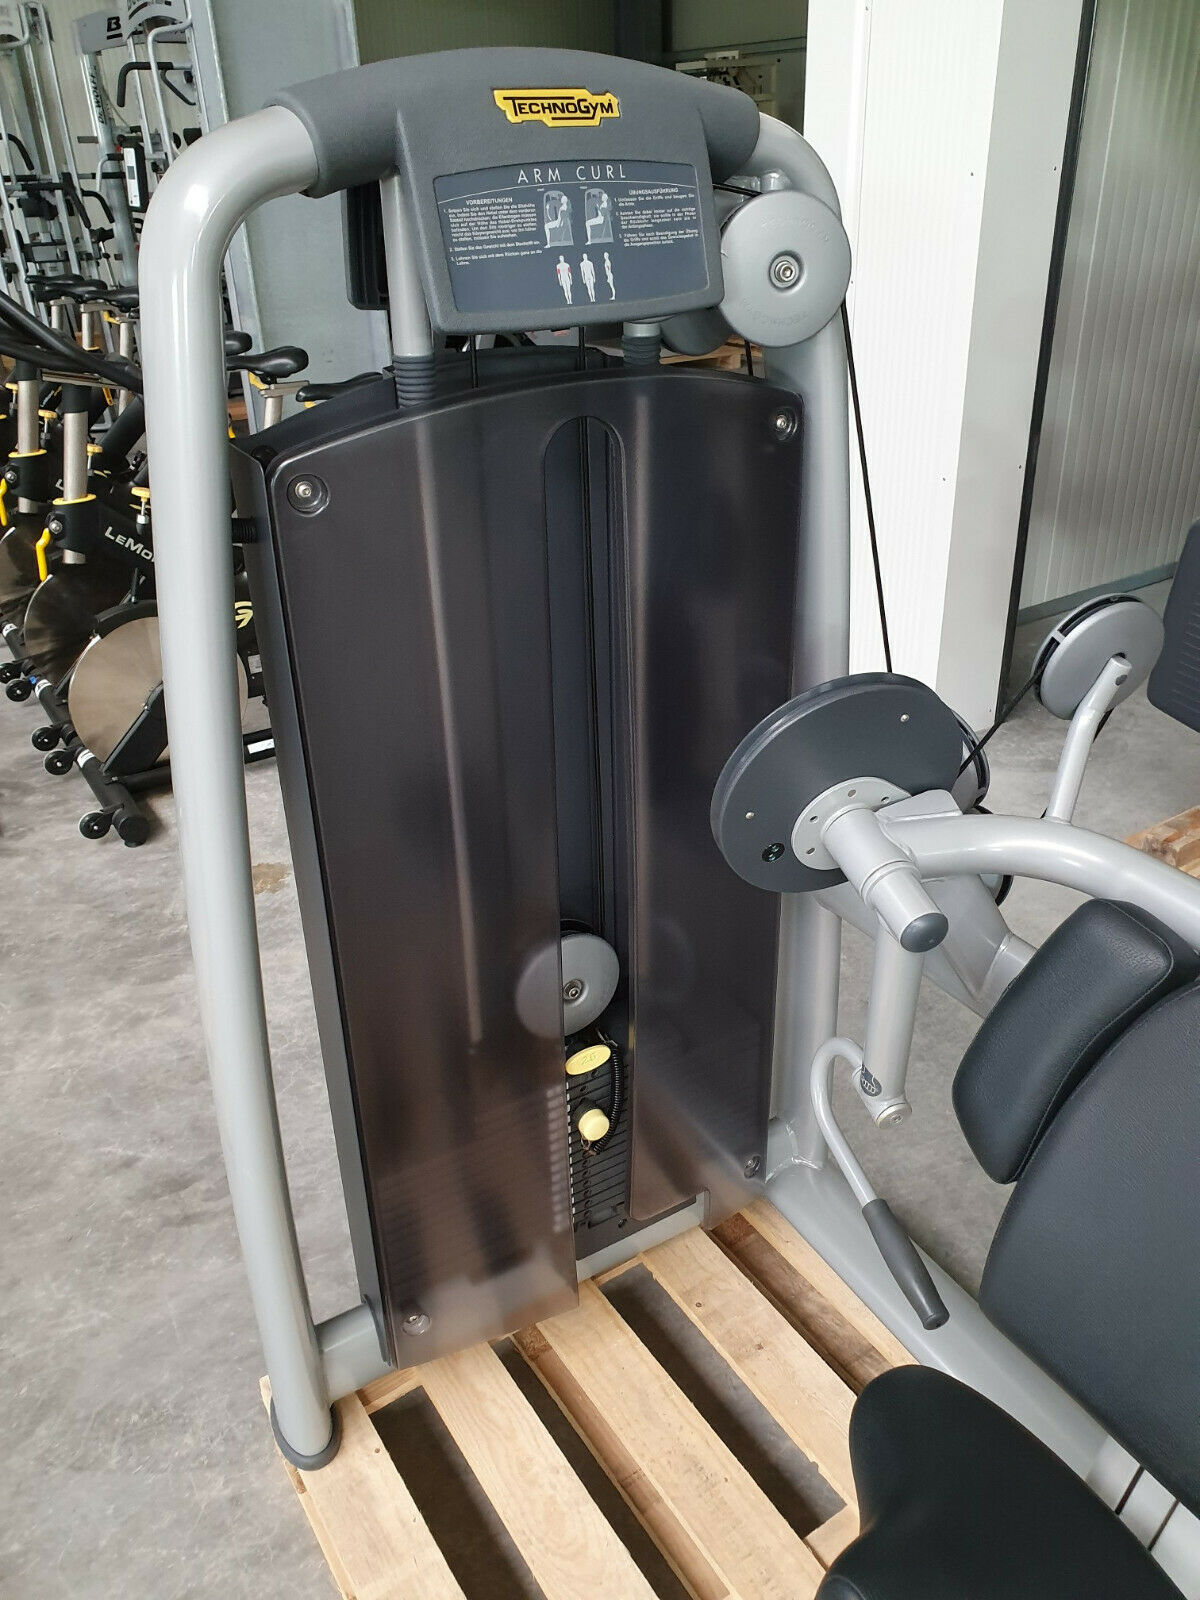 TECHNOGYM Selection Line Arm Curl Bizeps Maschine Oberarm Training Fitness Gym Fitness-Inserate.de